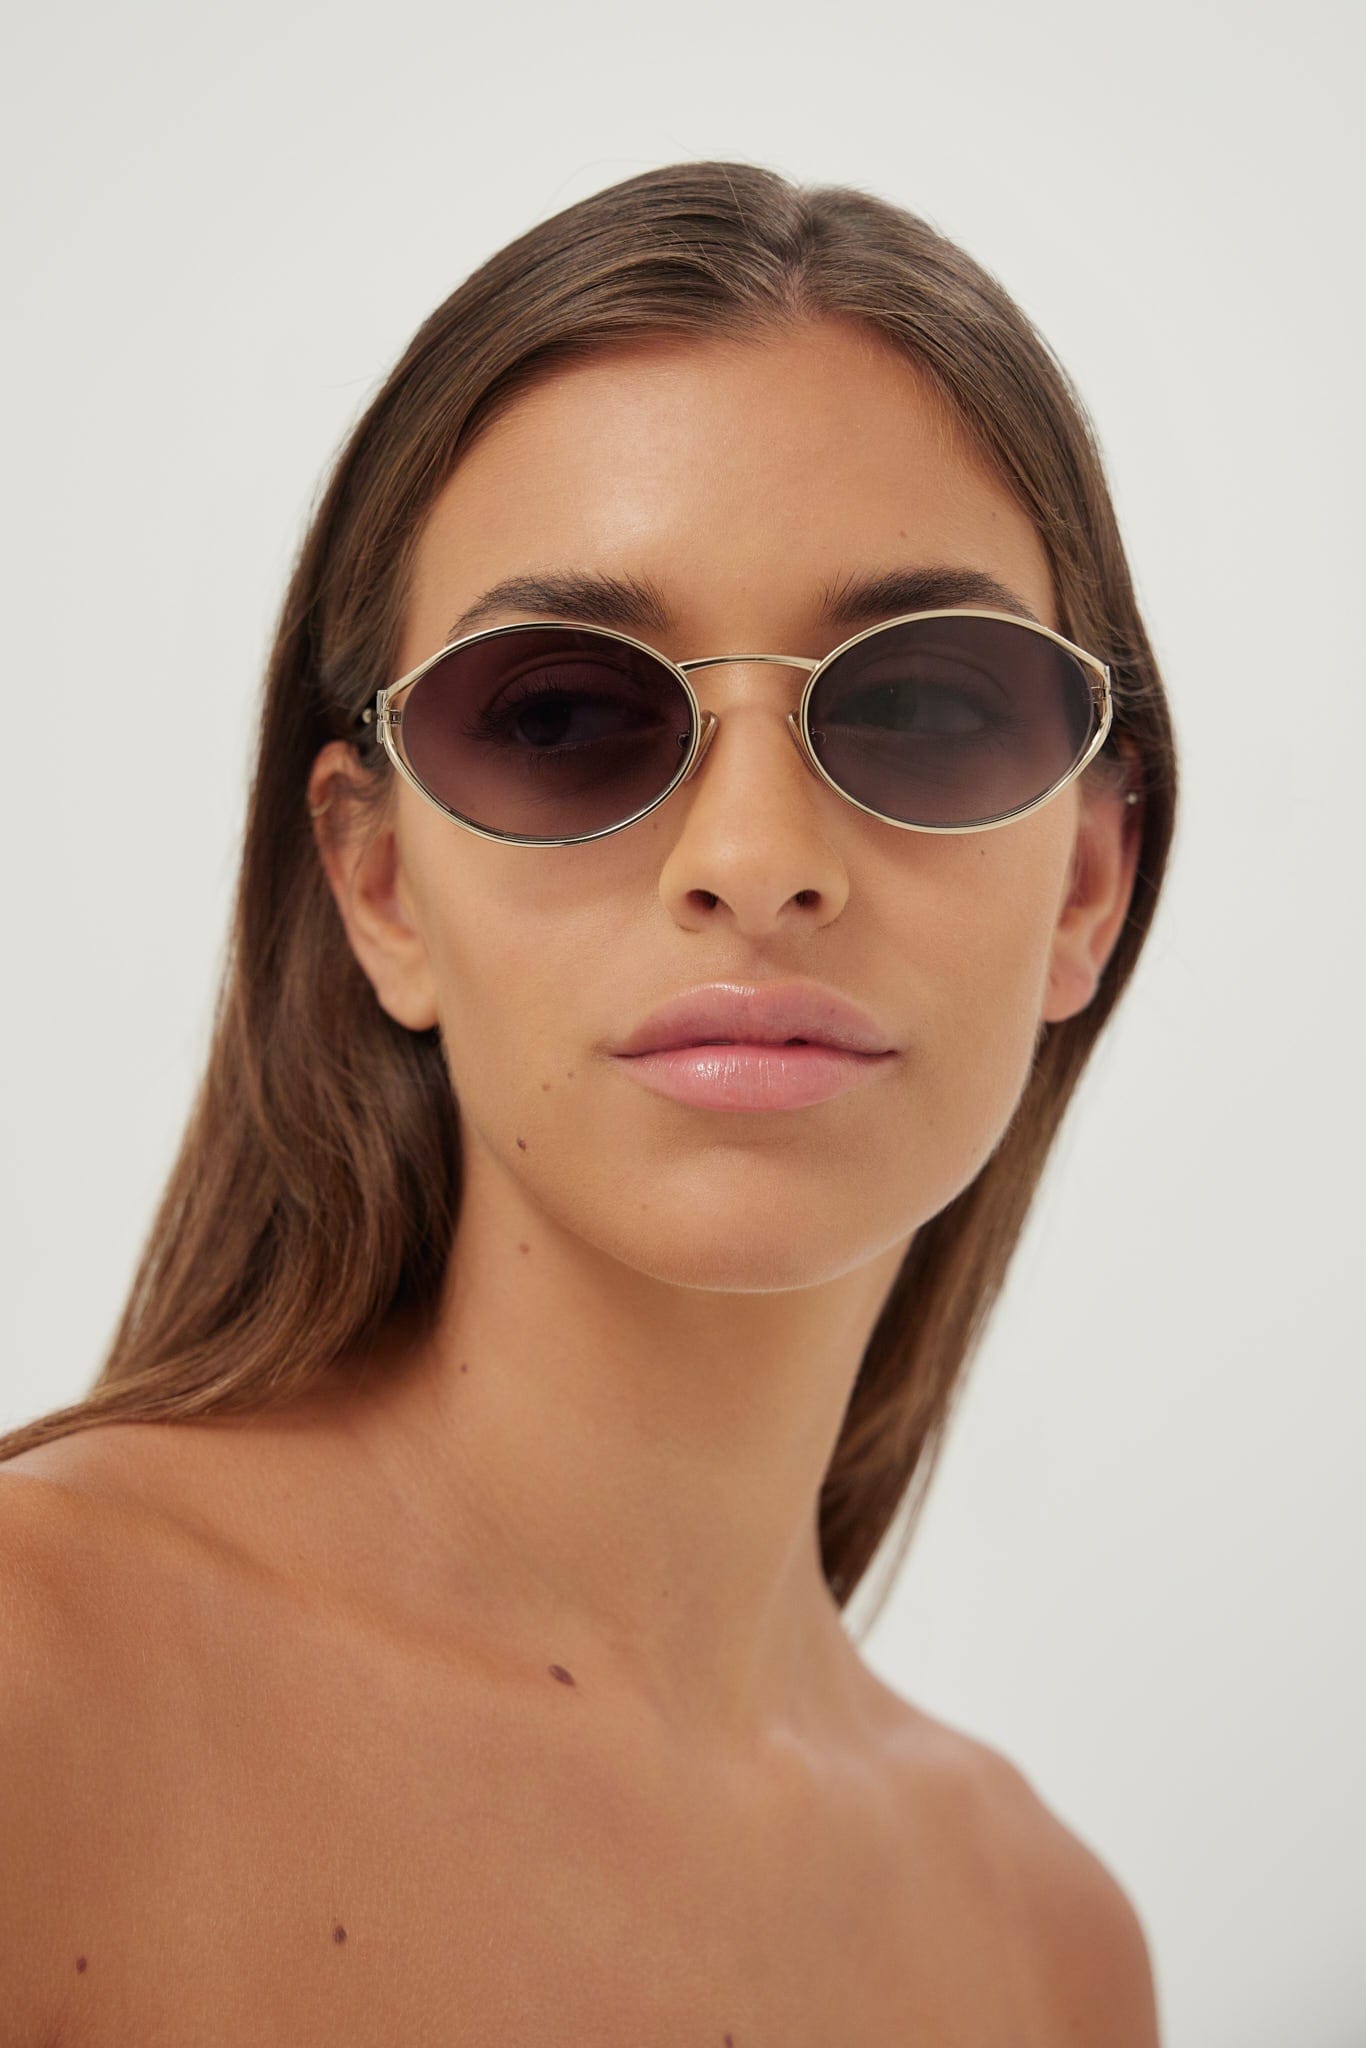 Miu Miu oval metal sunglasses with grey lenses - Eyewear Club